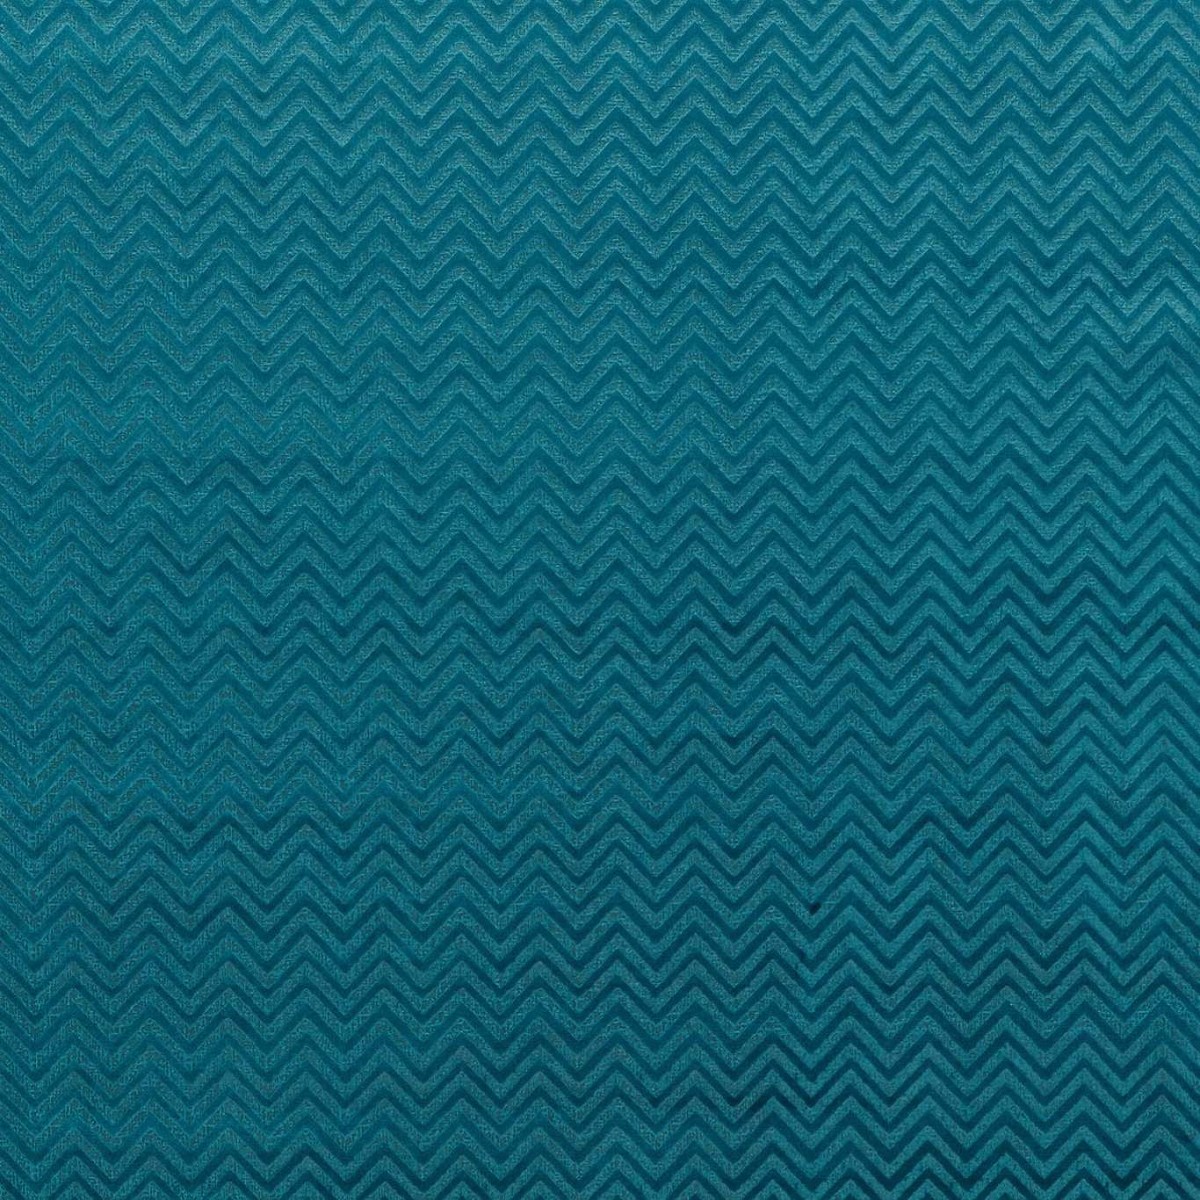 Nexus Peacock Fabric by Studio G